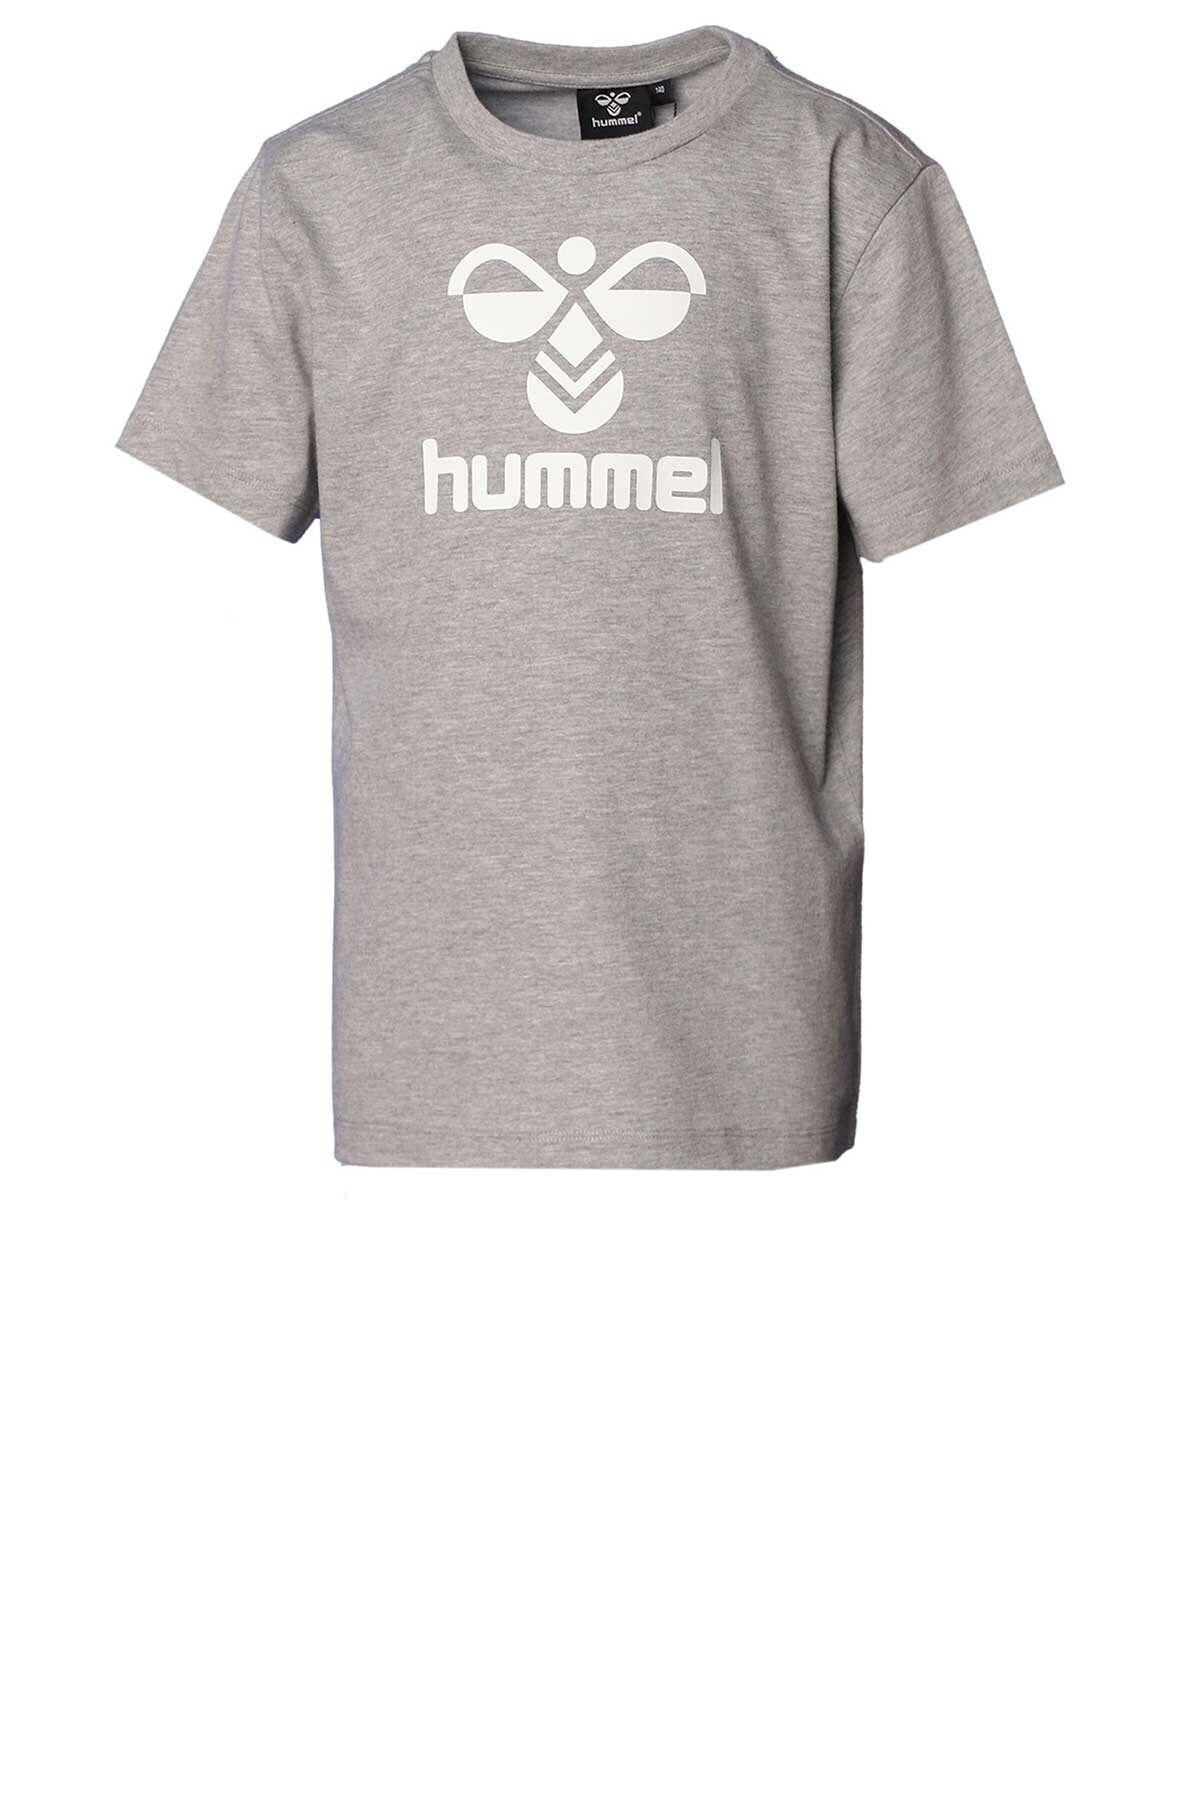 hummel تی شرت کودک لورن 911653-2006